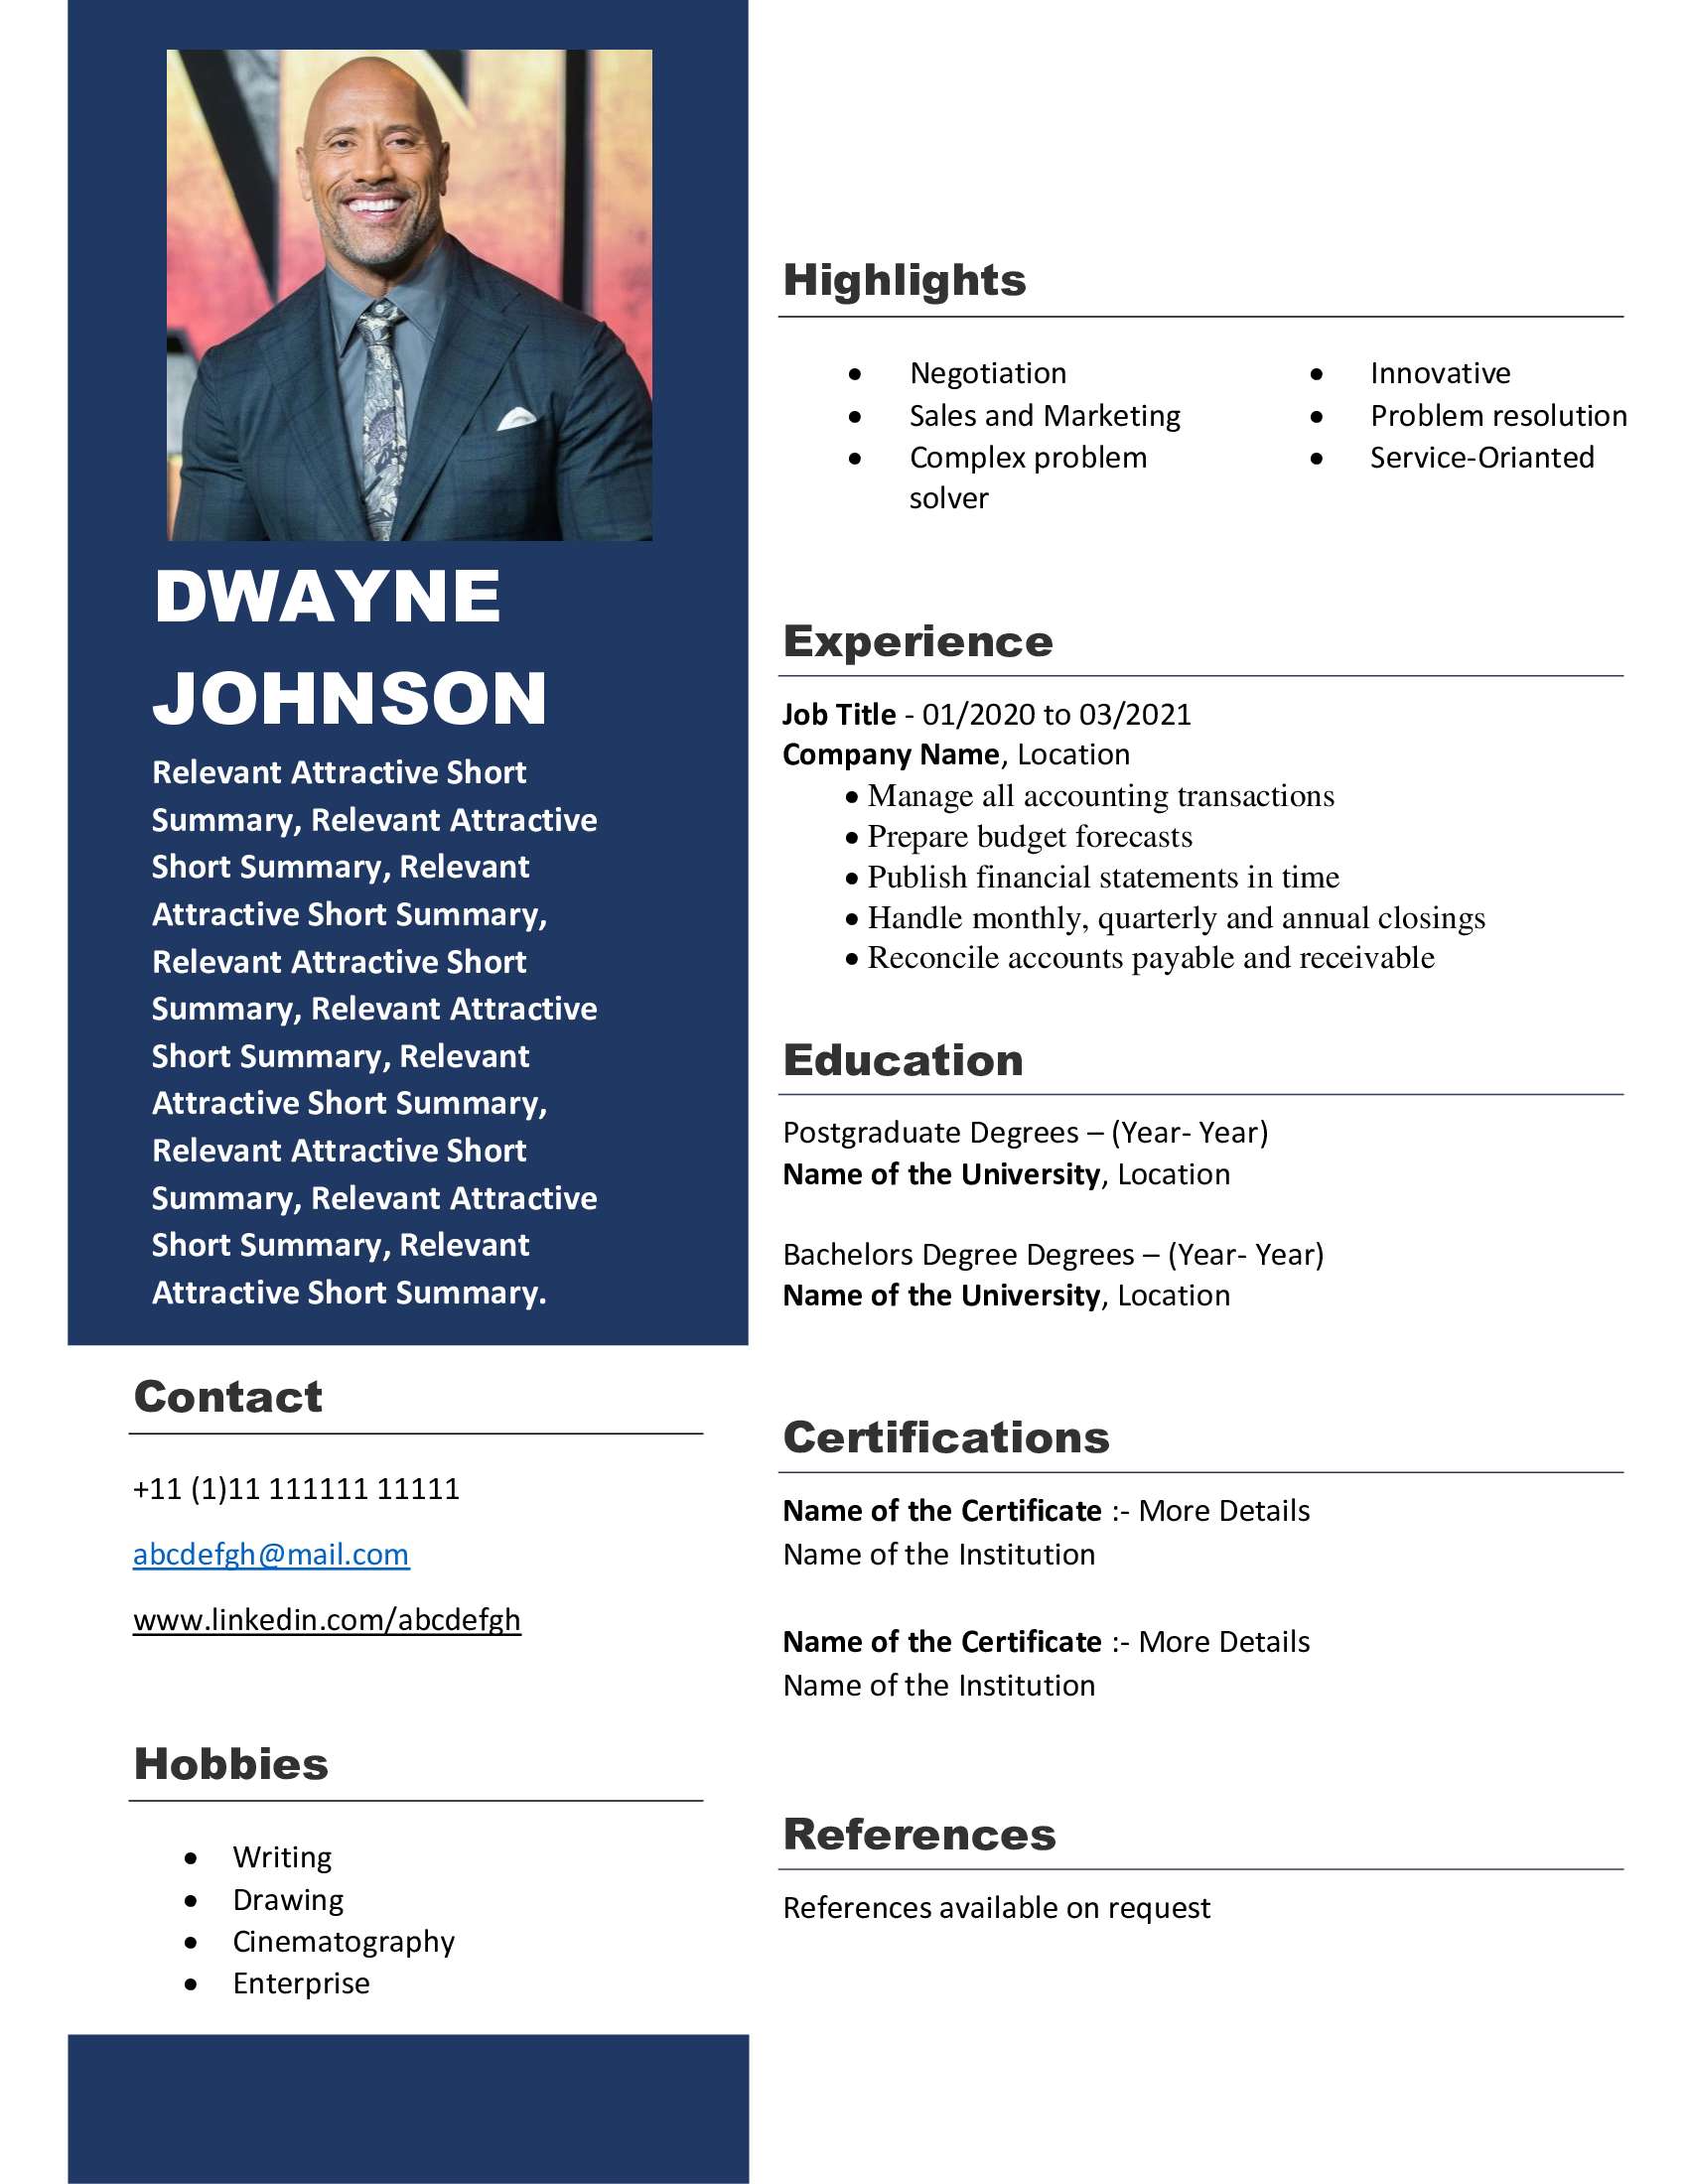 Free Download Professional CV Templates - Editable DOC - Dwayne Johnson